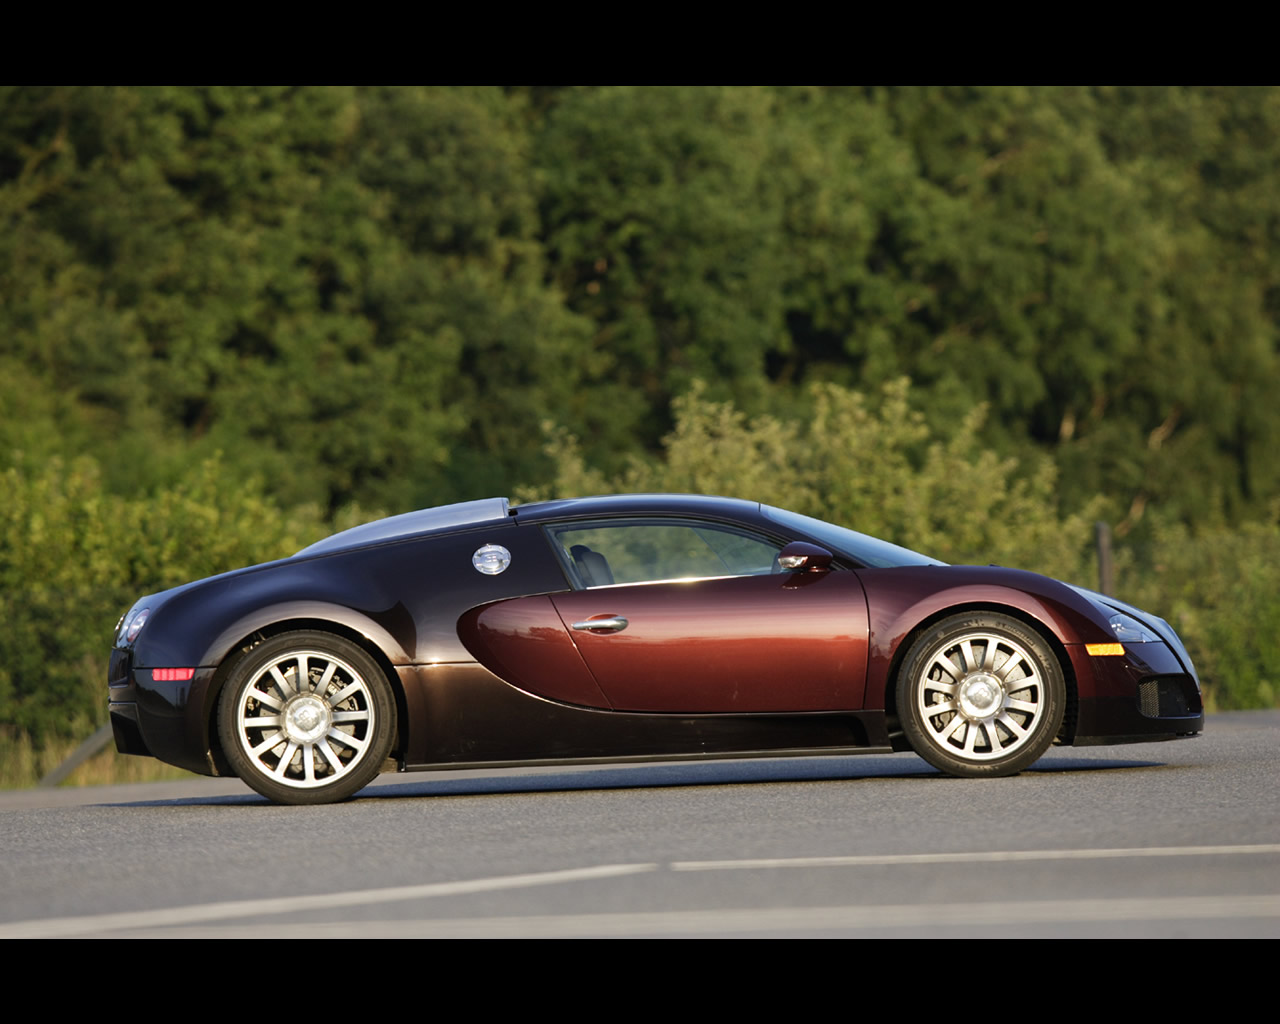 Black Bugatti Veyron Wallpaper HD In Cars Imageci